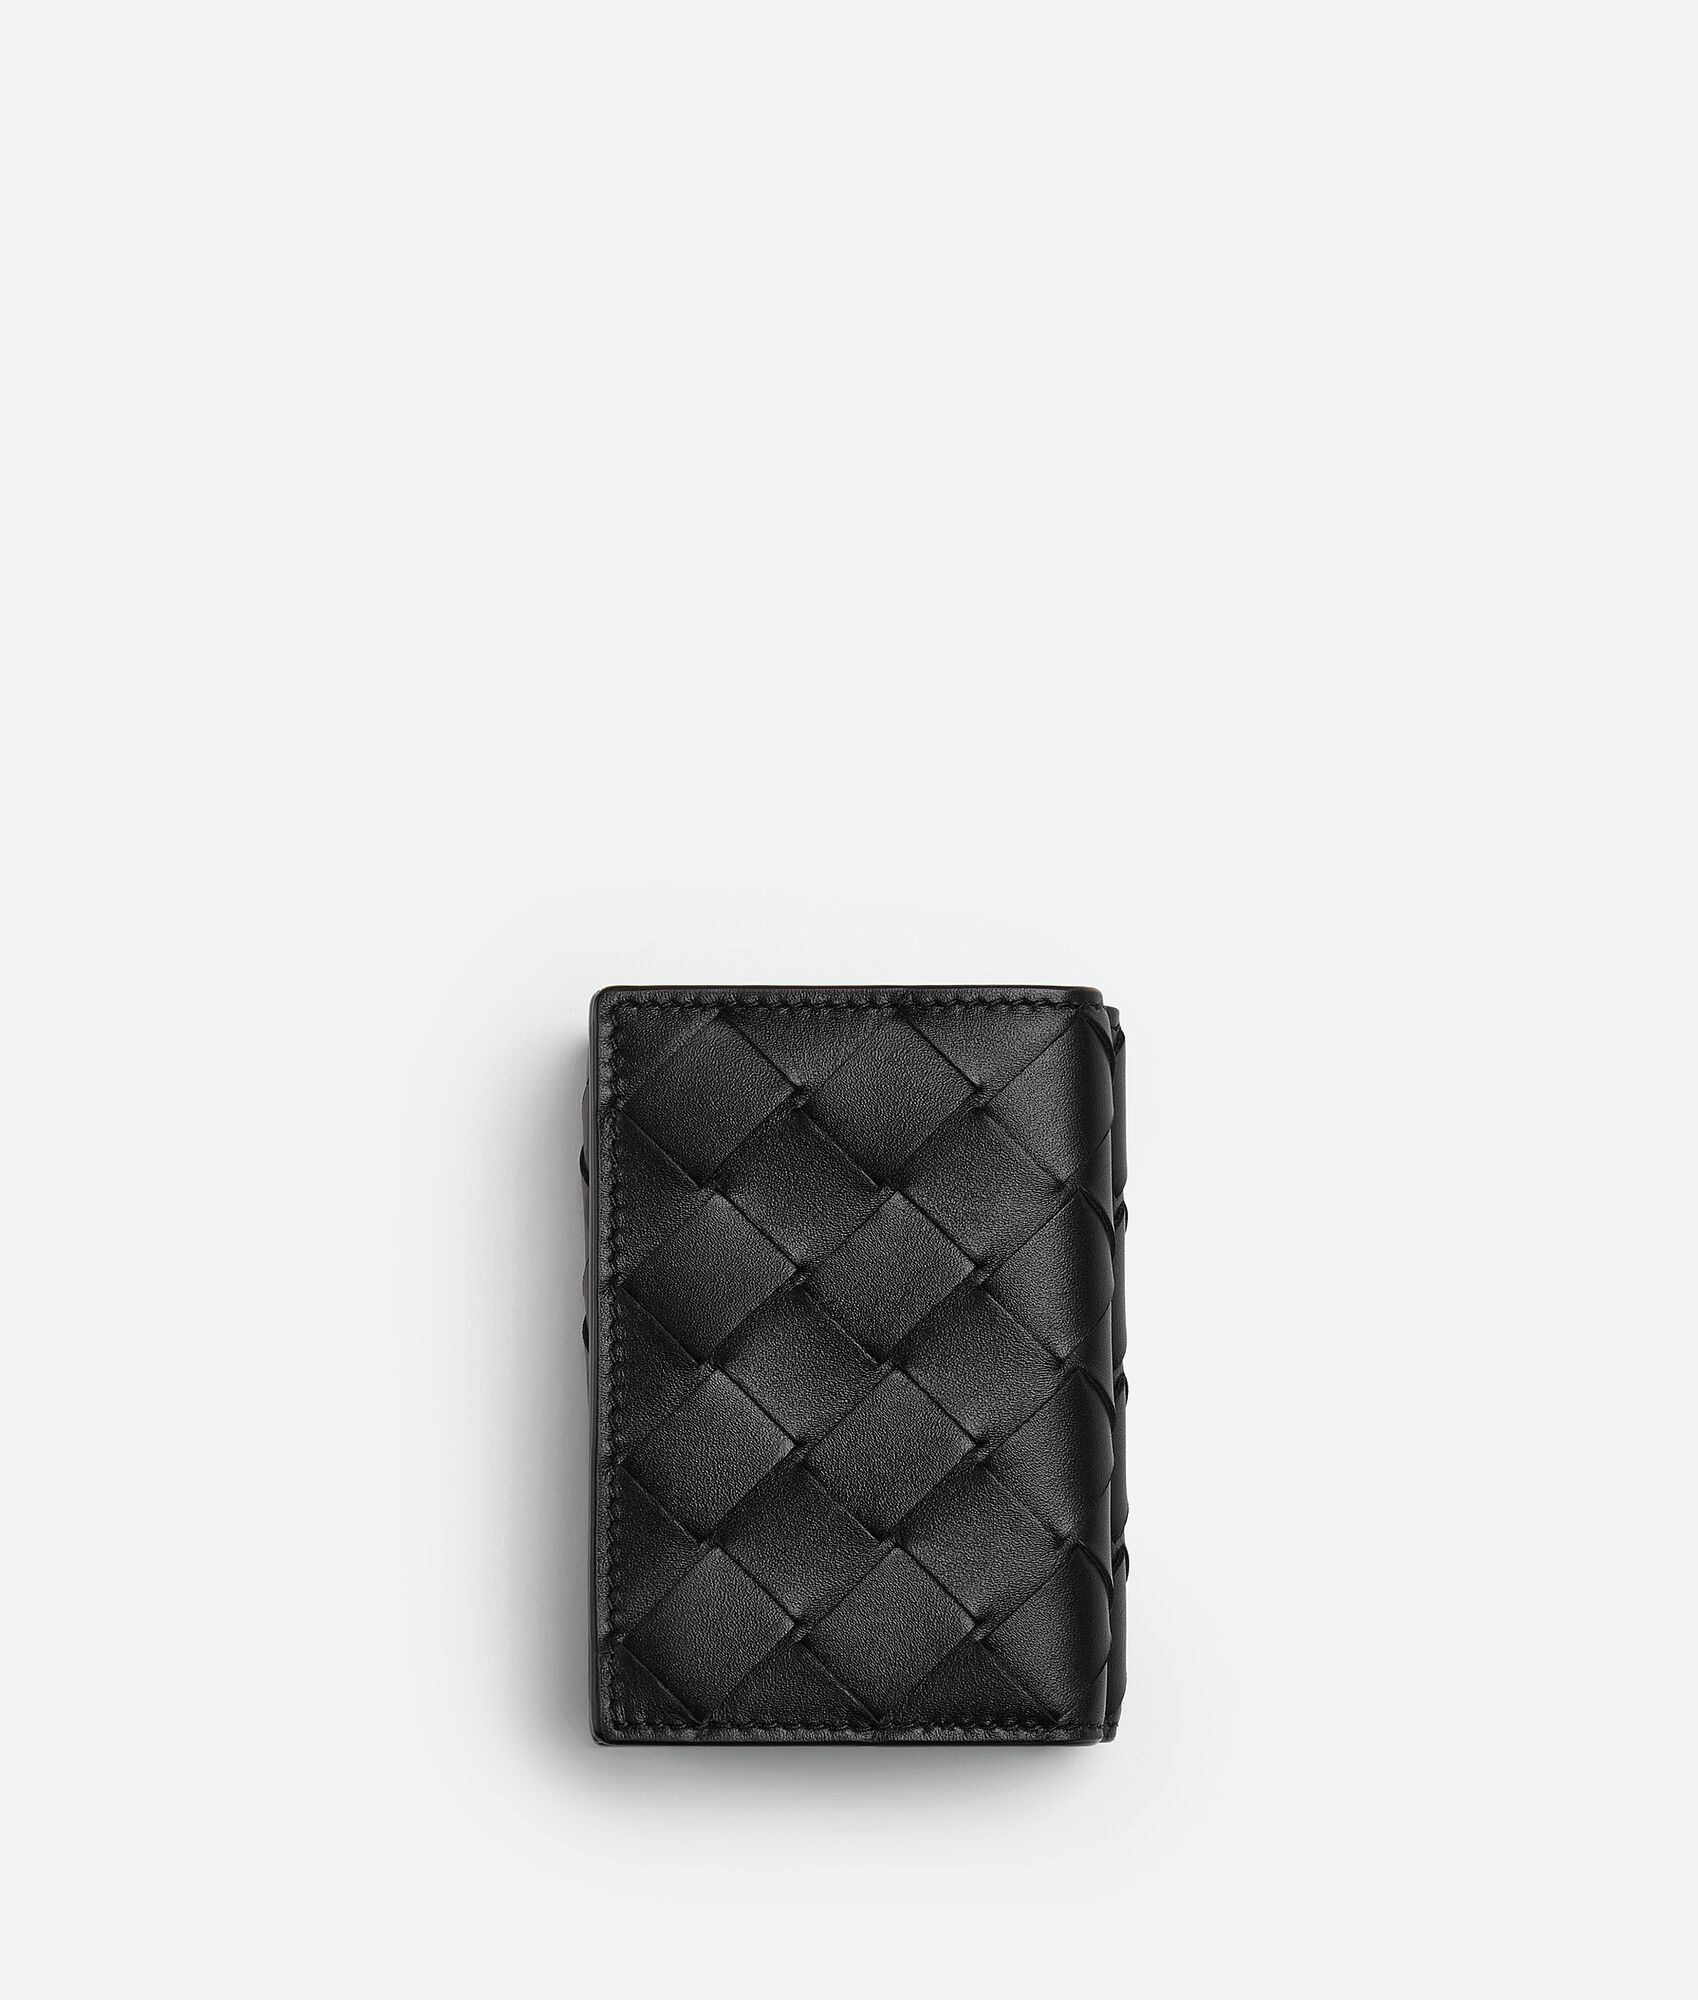 『BOTTEGA VENETA ミニ財布』の外装画像